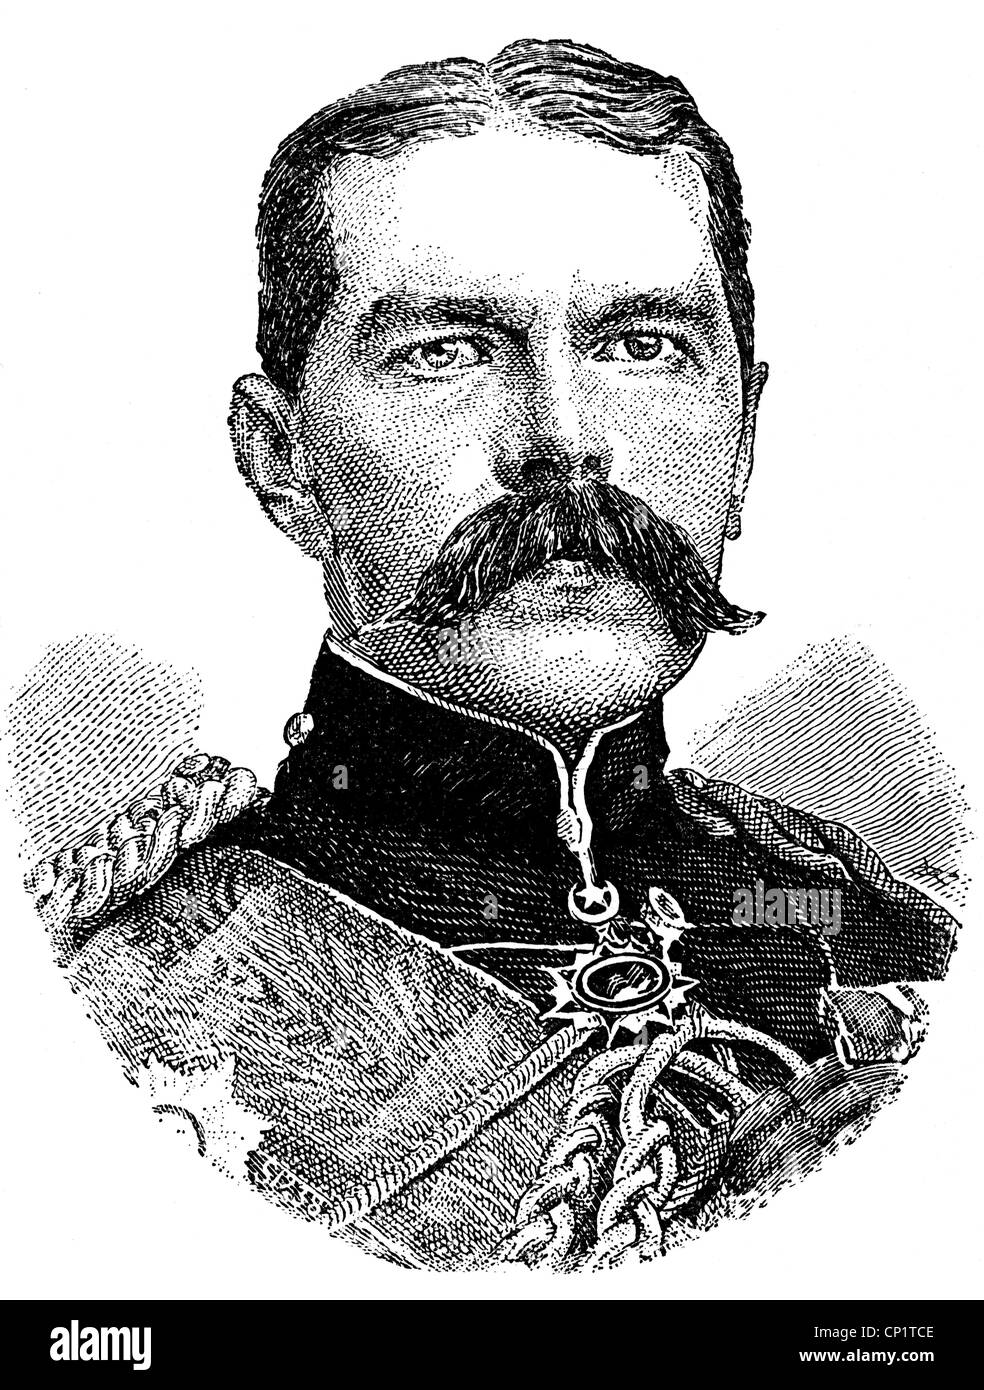 Kitchener, Horatio, 24.6.1850 - 5.6.1916, British general, portrait, wood engraving, circa 1900, Stock Photo